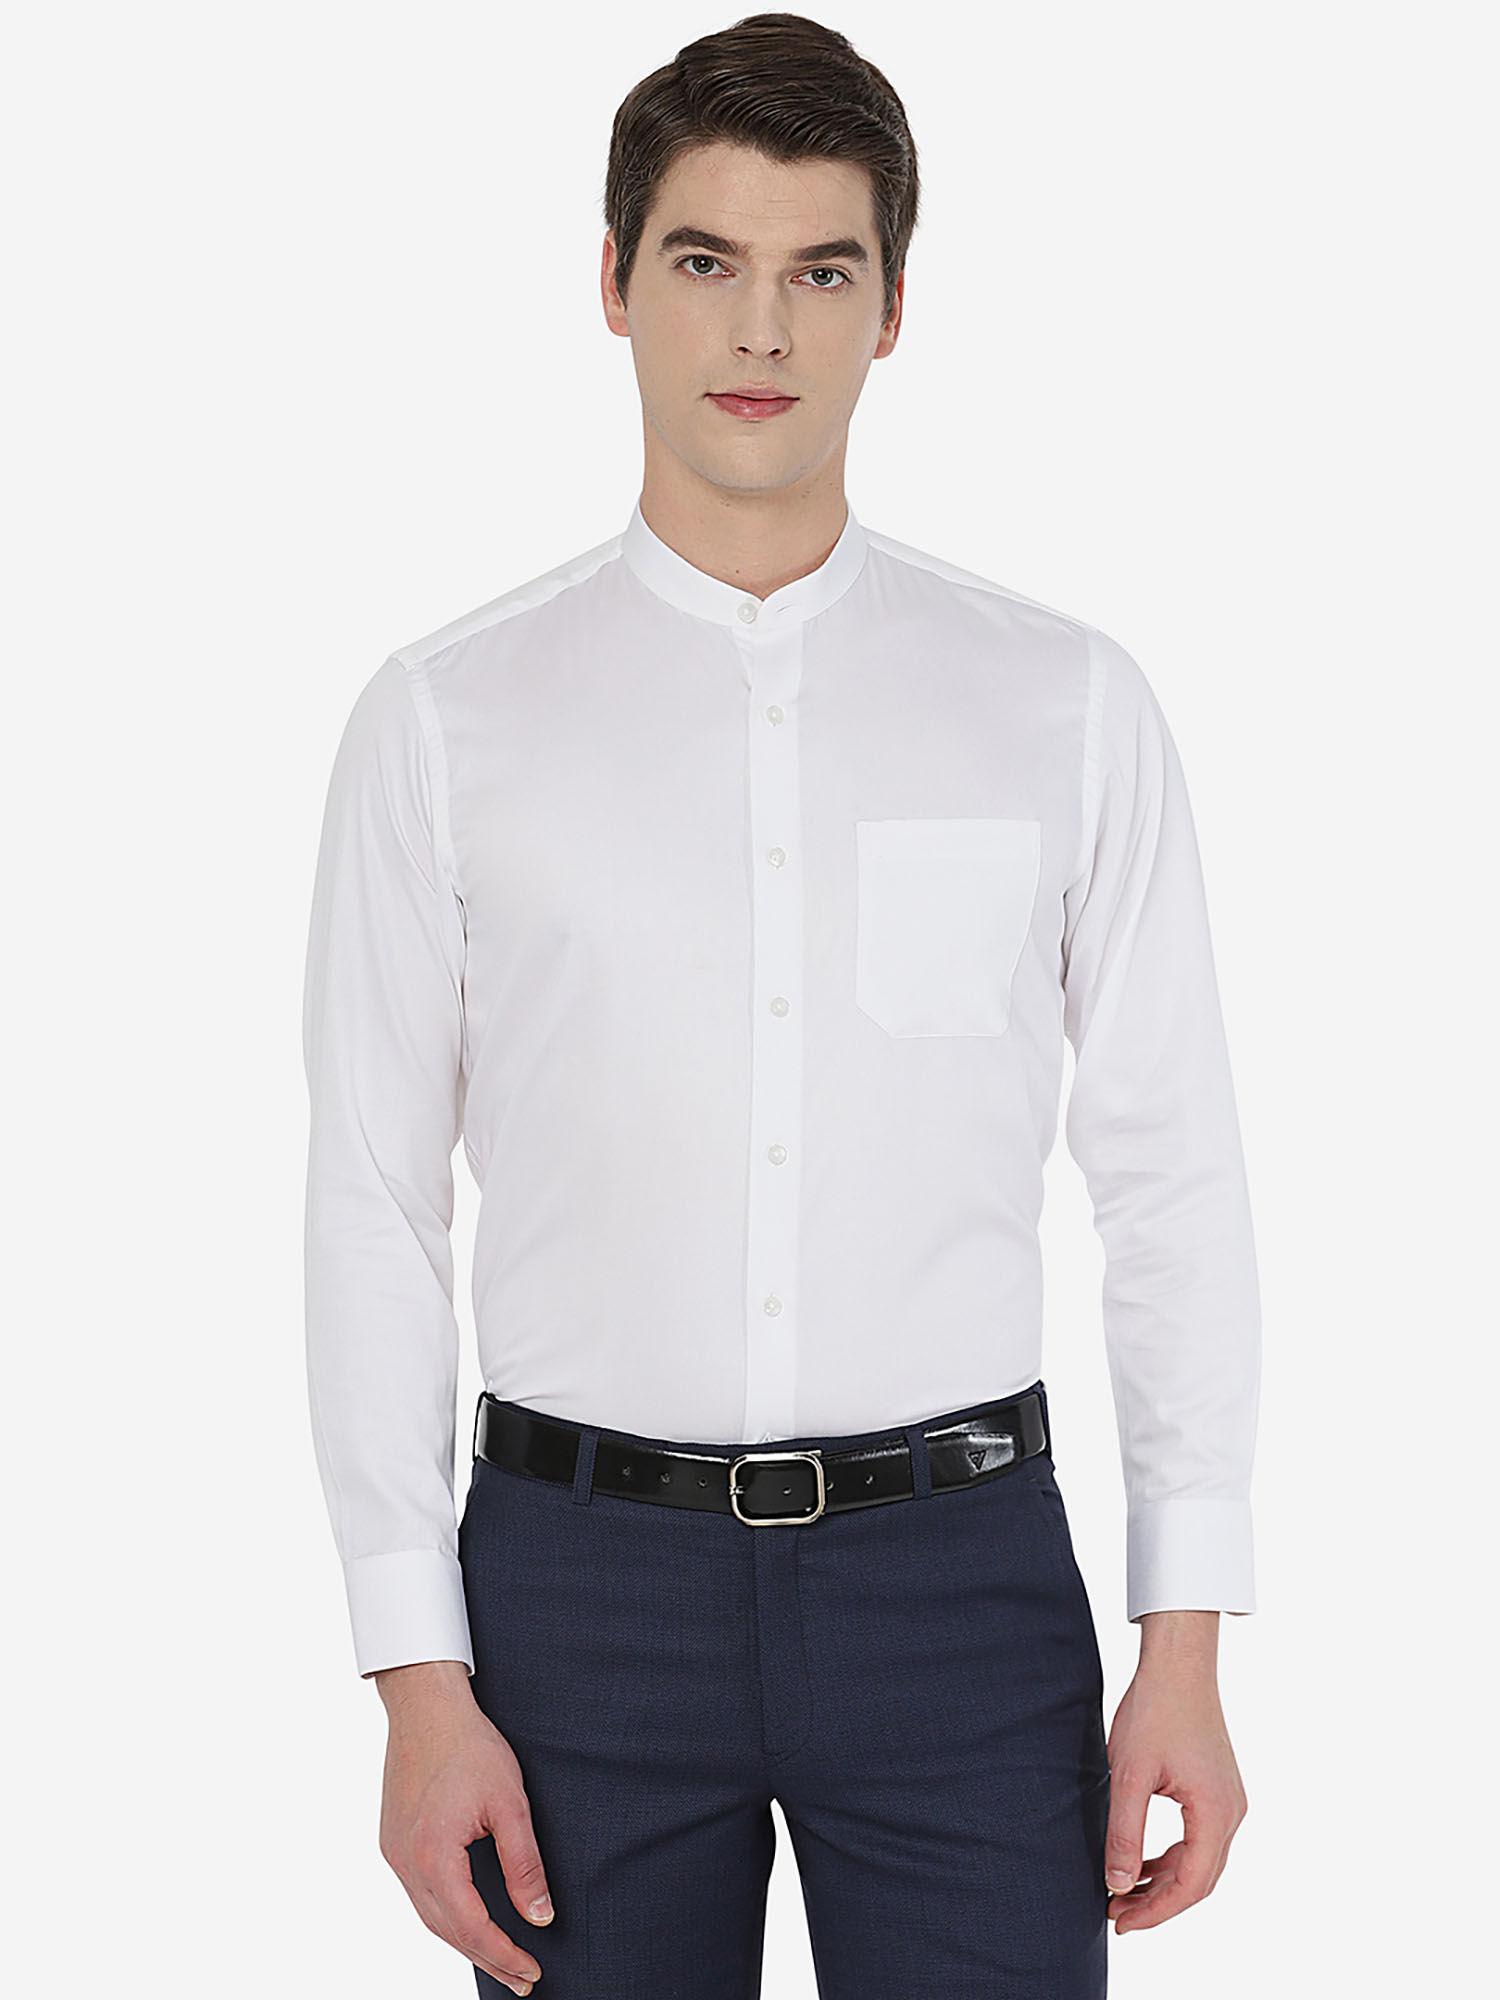 mens-solid-white-cotton-slim-fit-formal-shirt